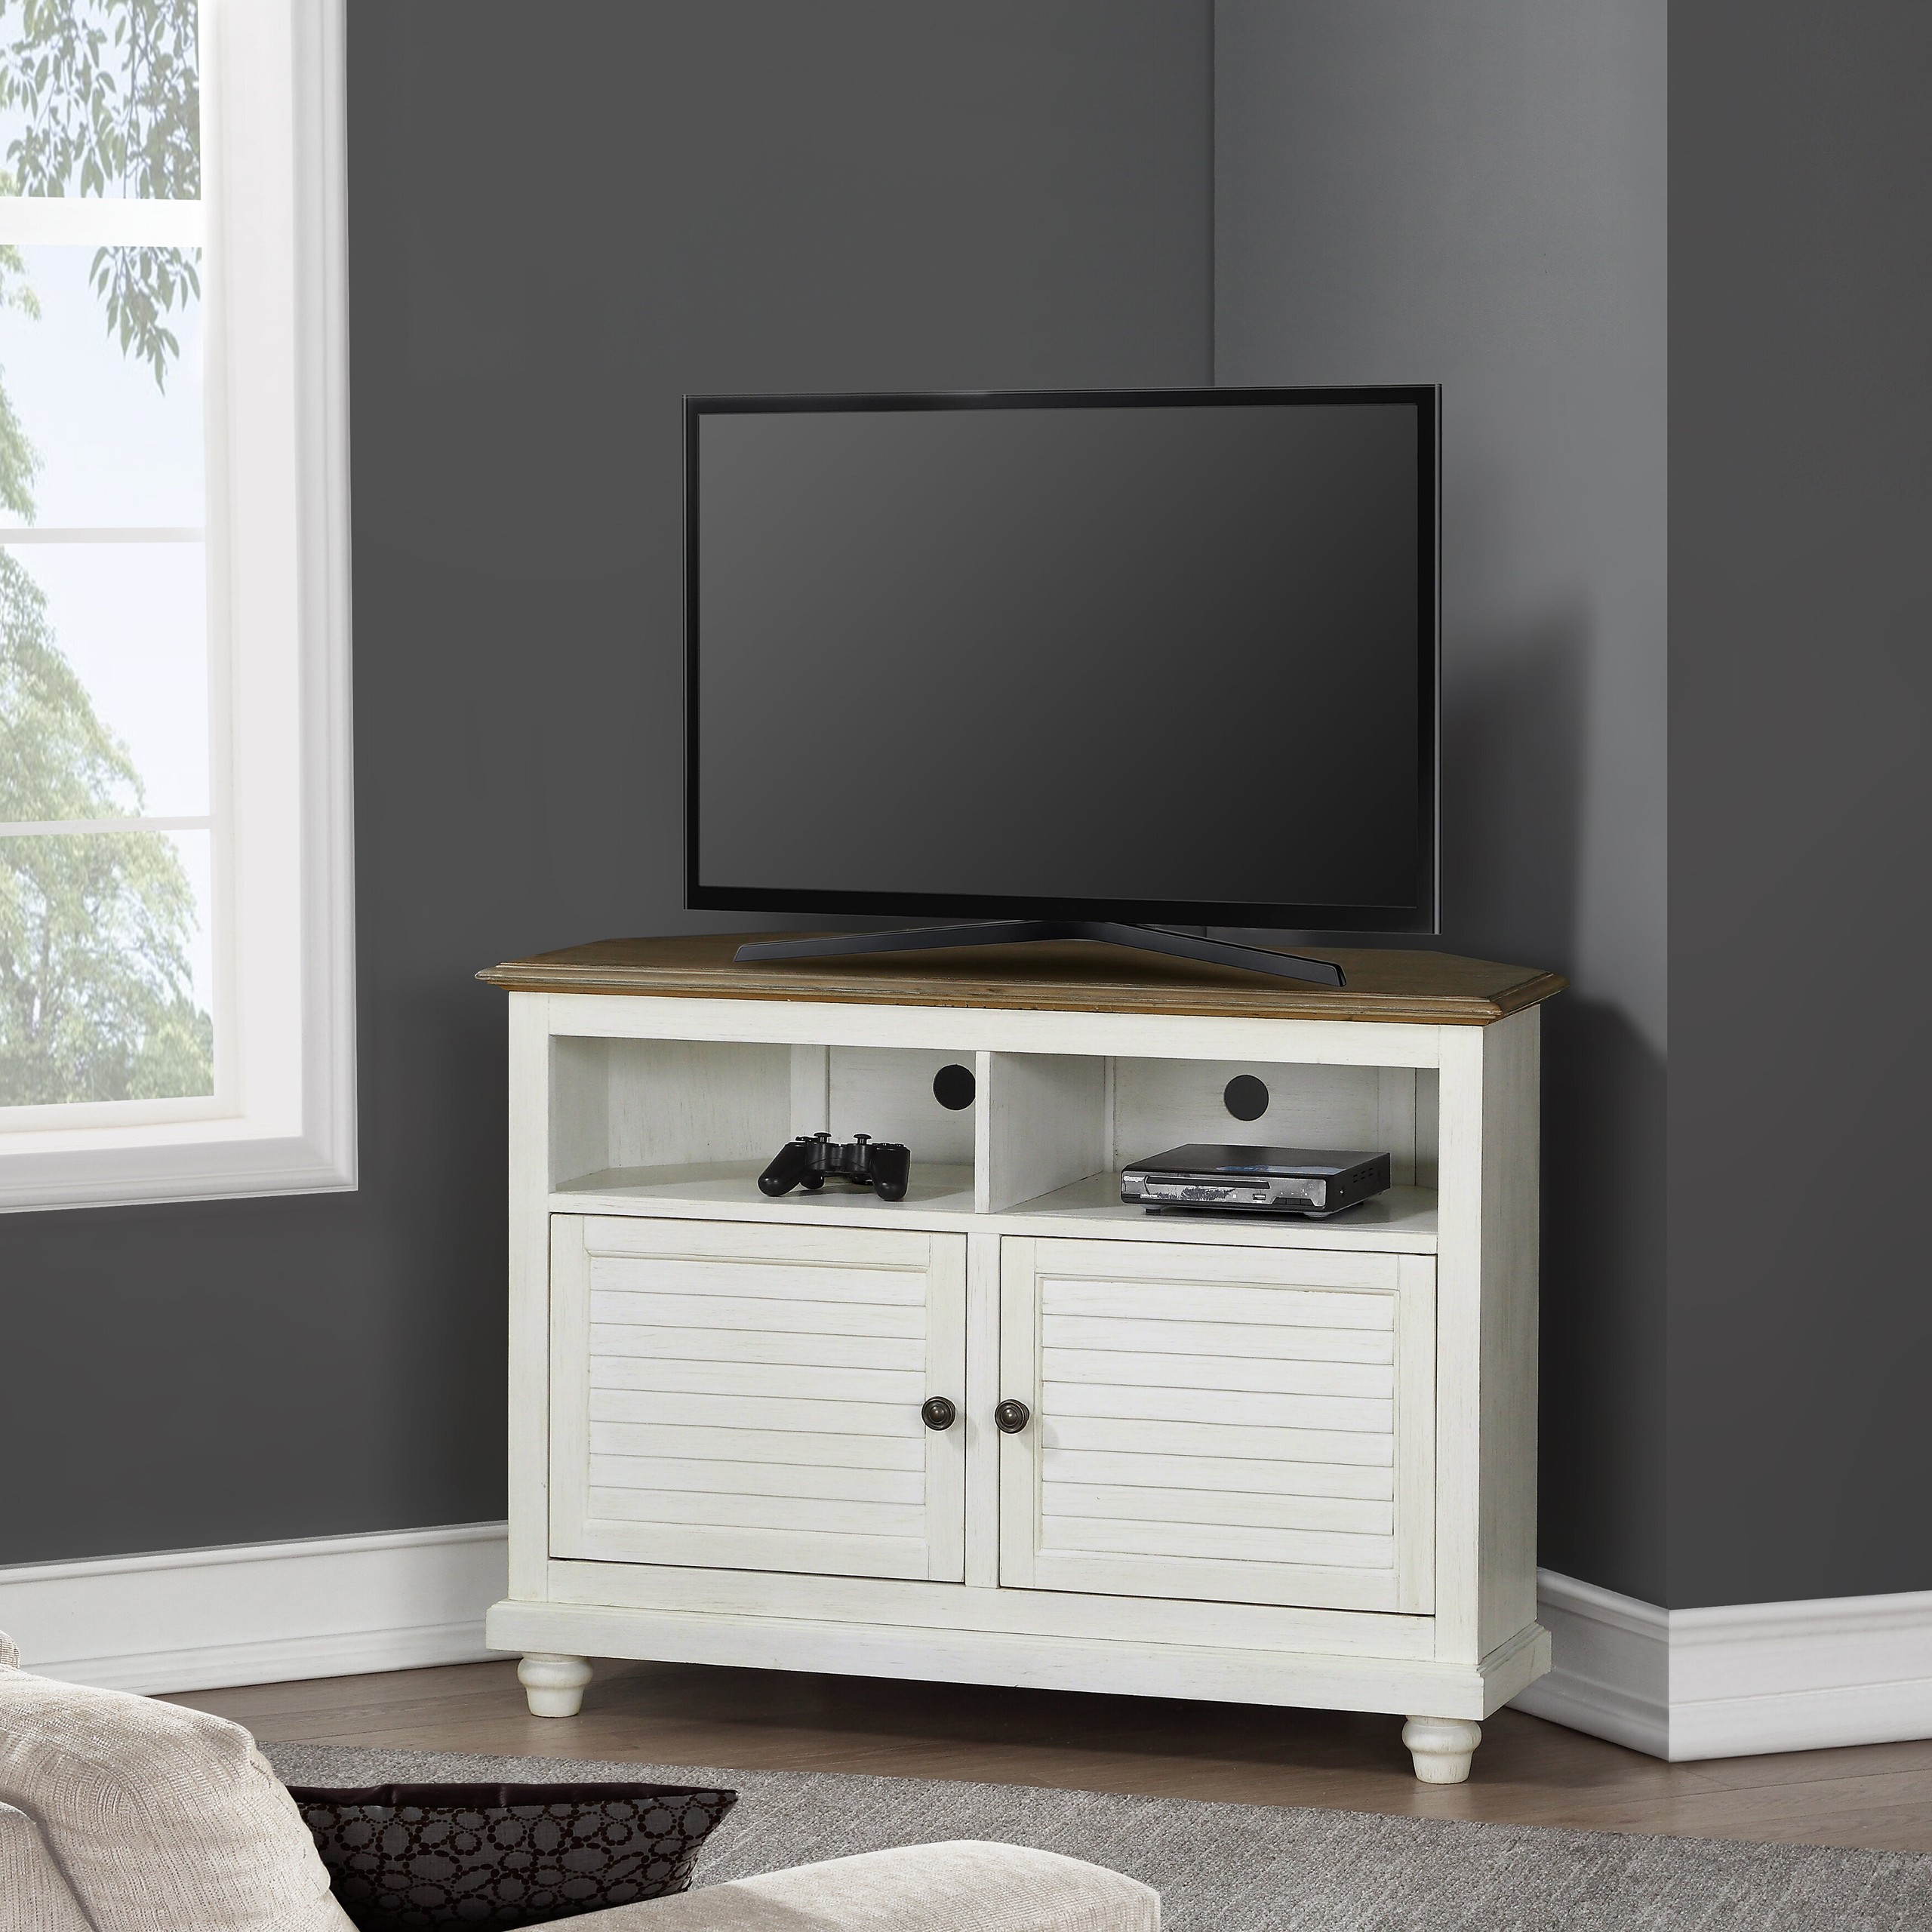 Wooden corner tv stand